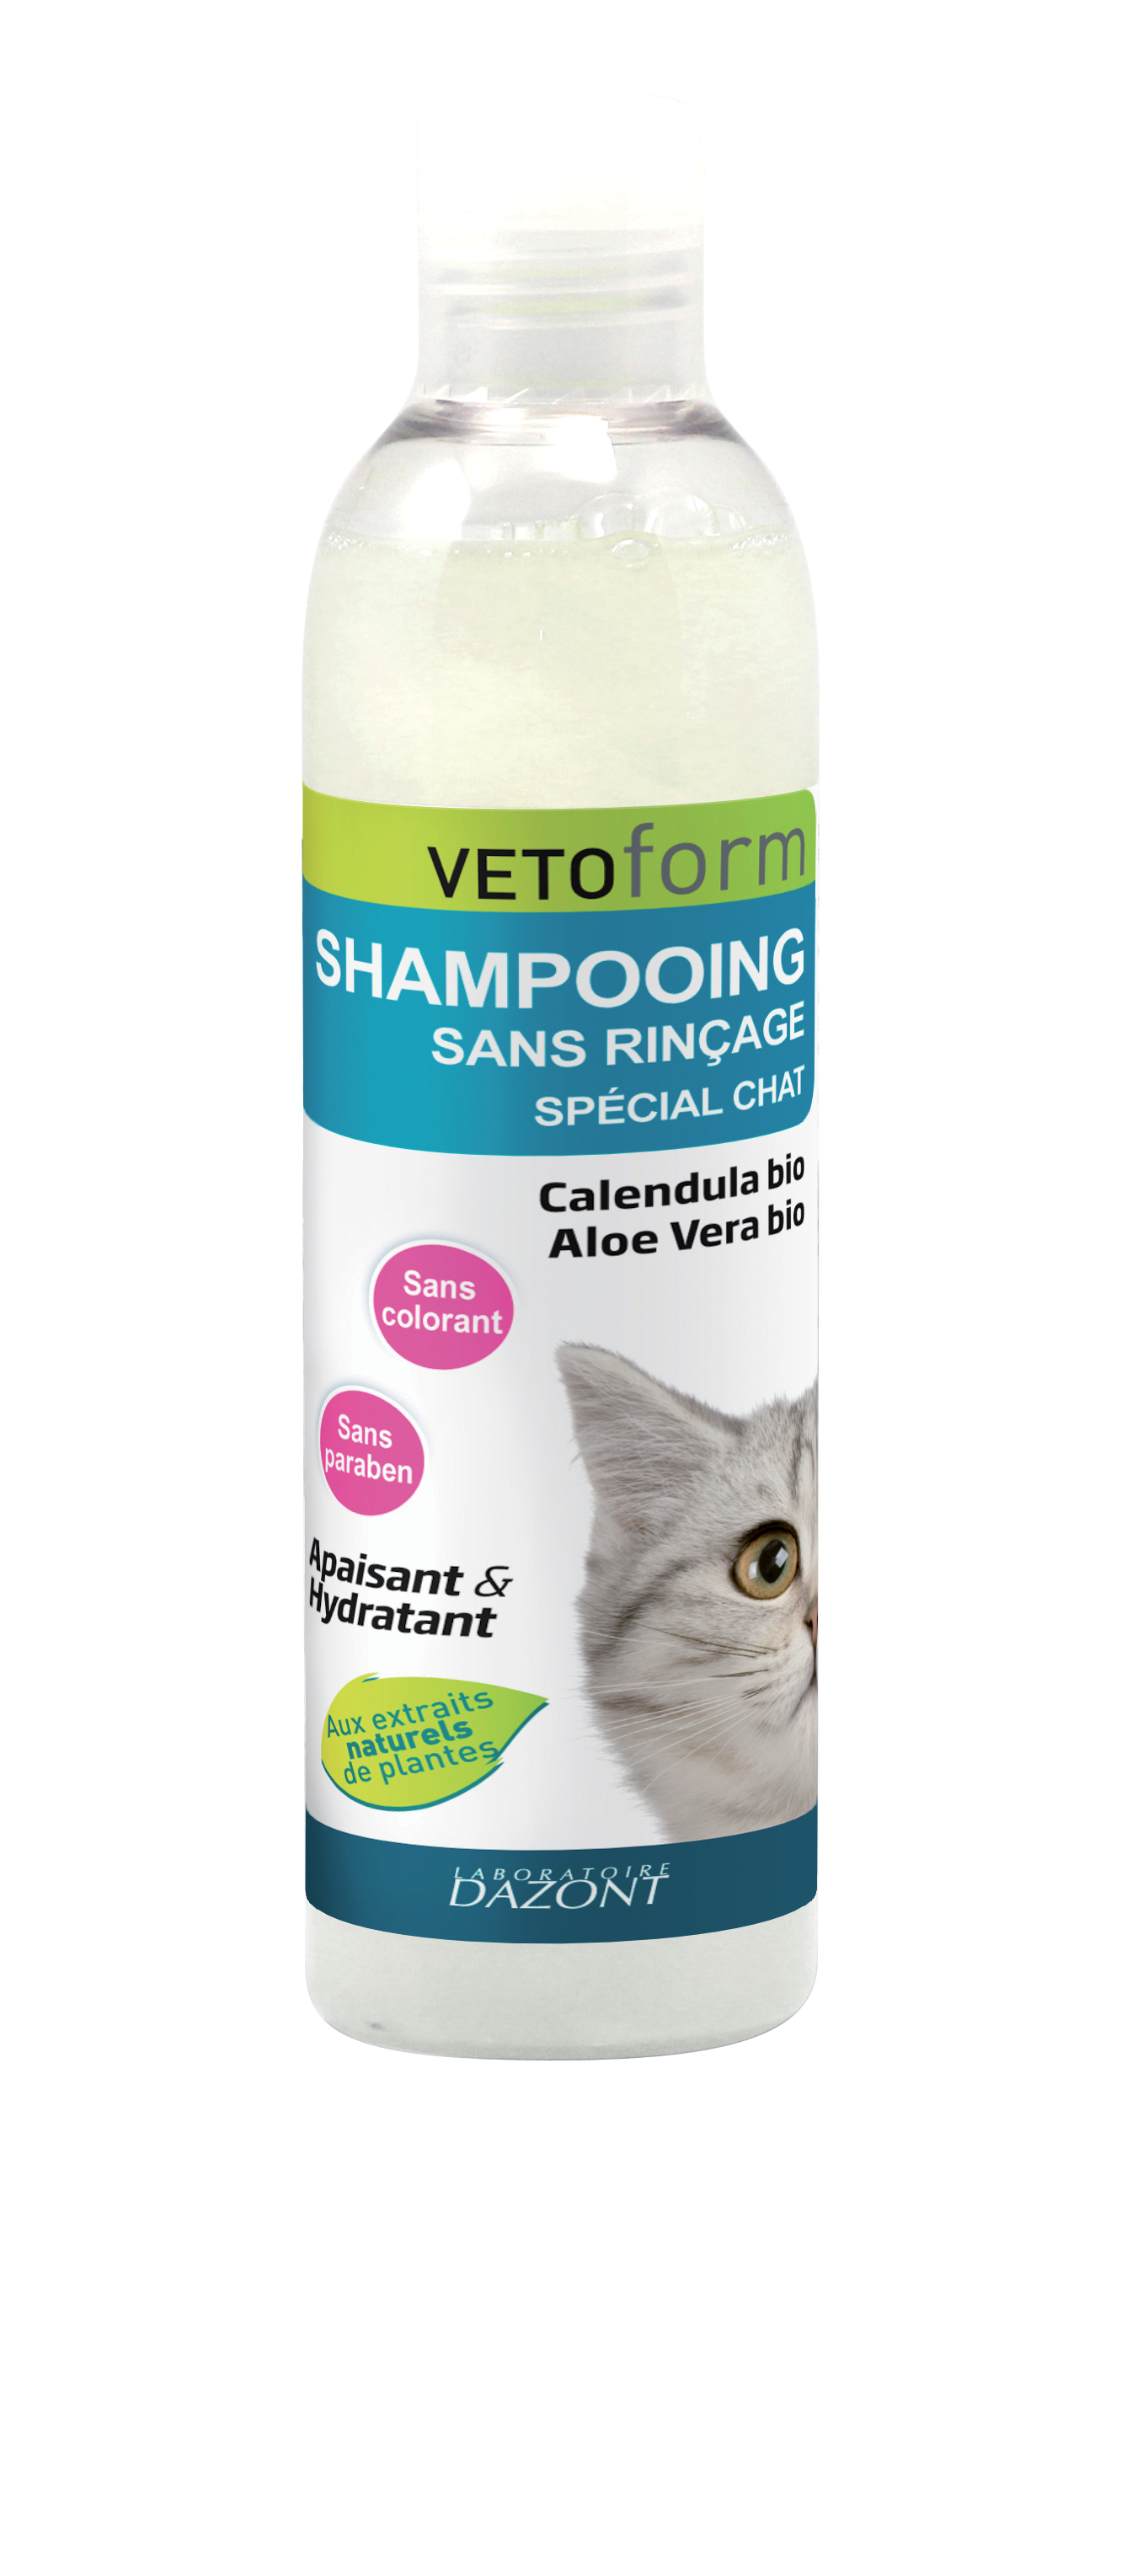 Vetoform Shampooing sans rinçage spécial chat 200 ml